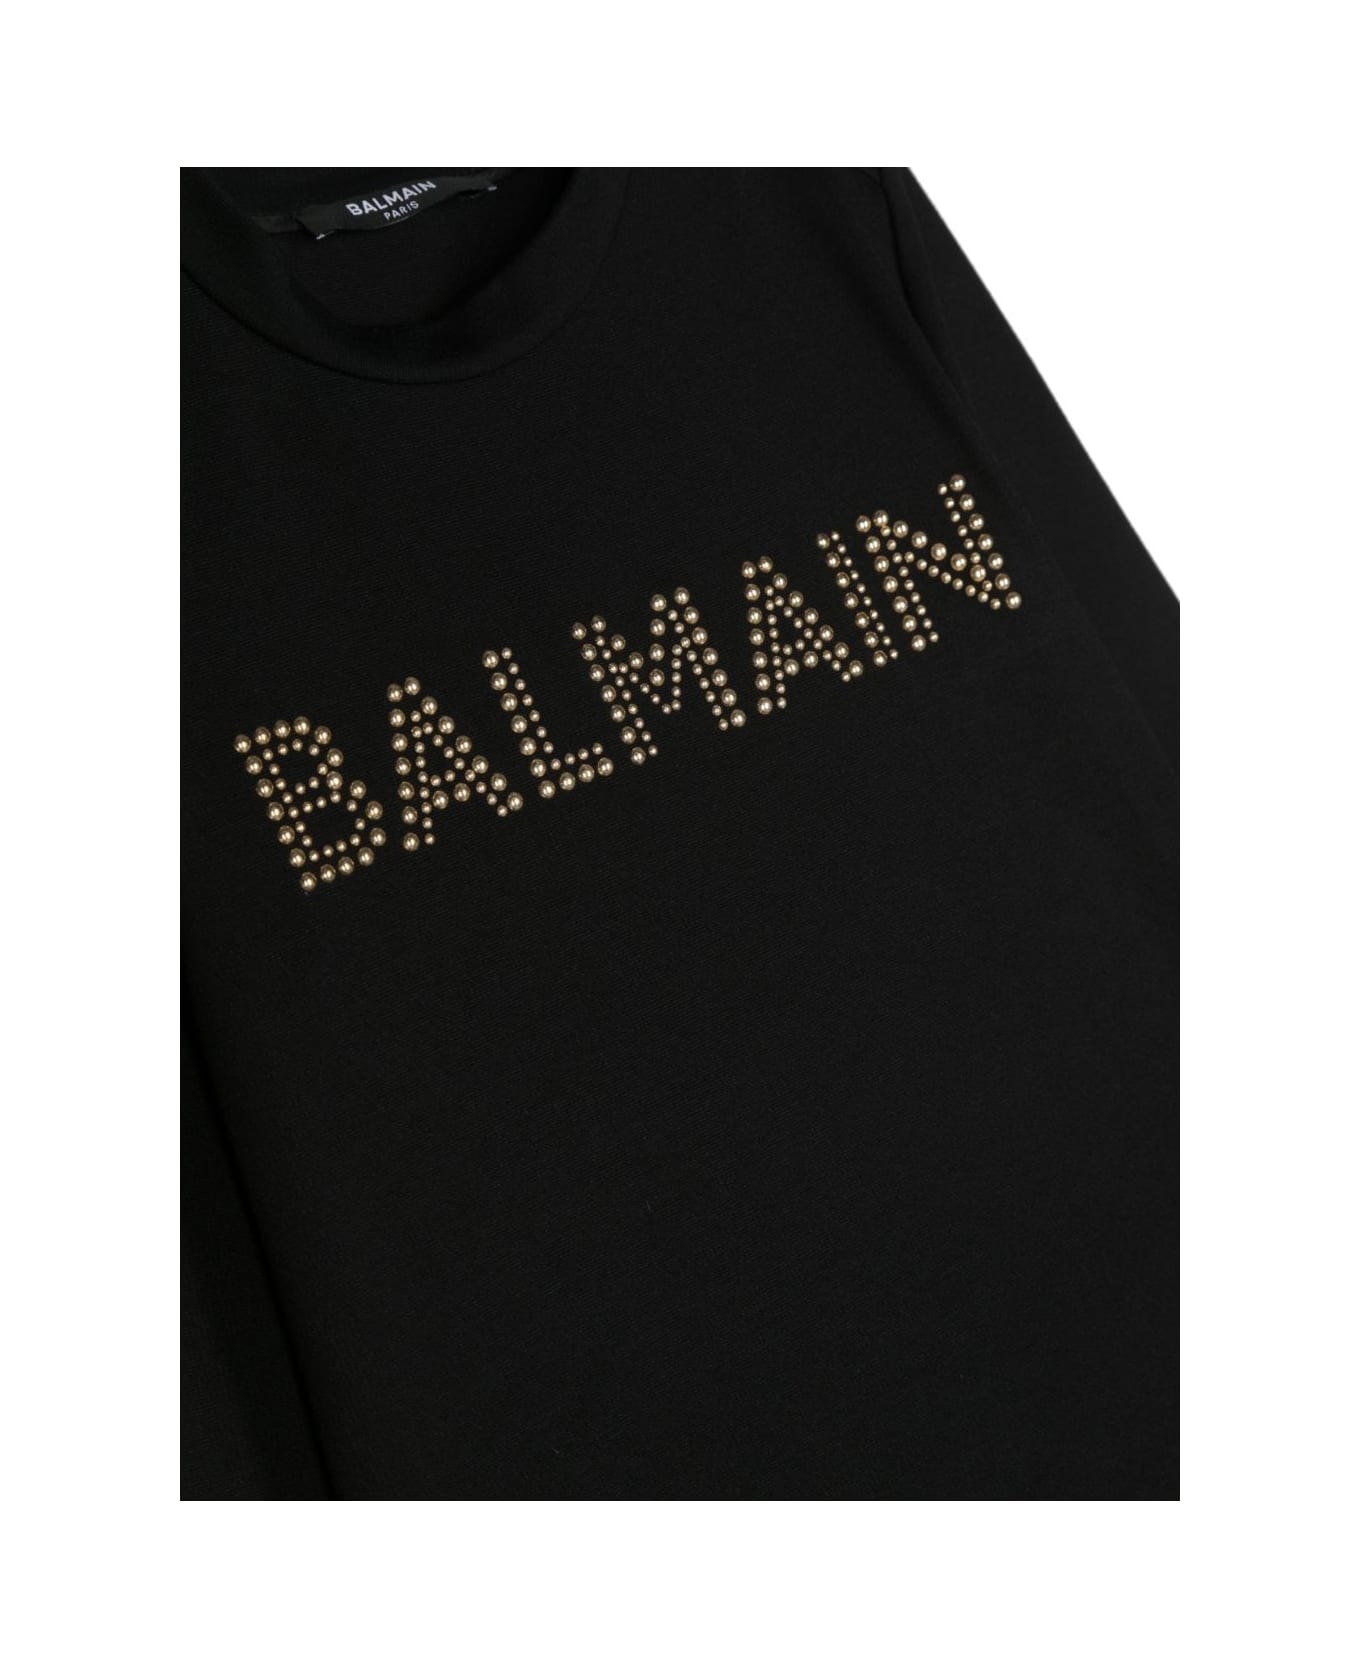 Balmain Sweatshirt Model Dress With Decoration - Black/white